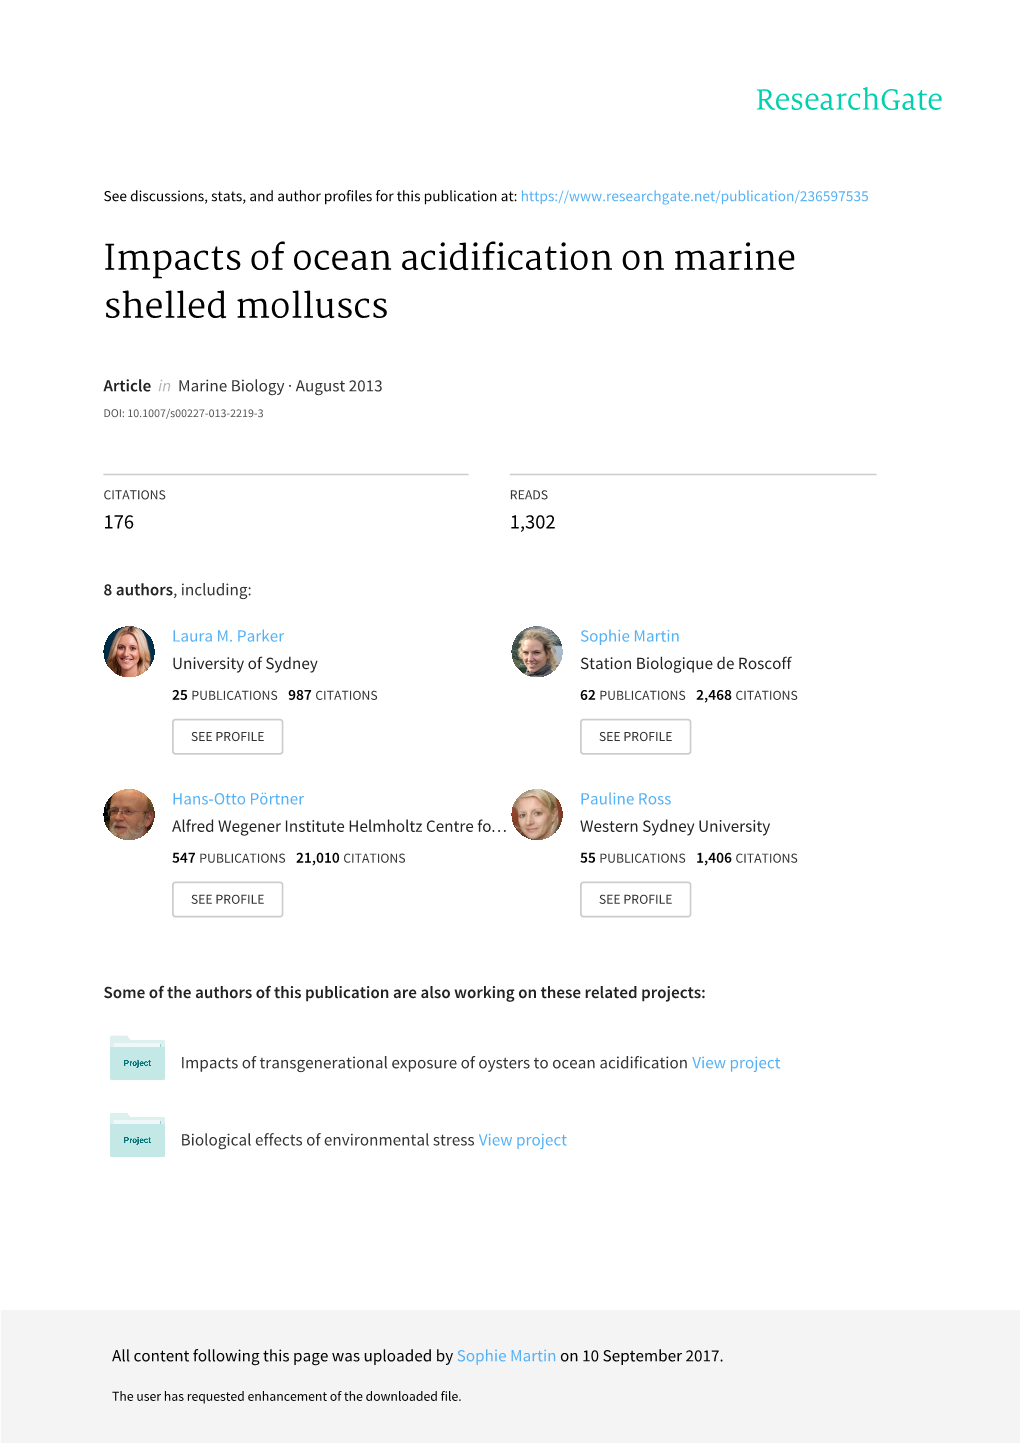 Impacts of Ocean Acidification on Marine Shelled Molluscs